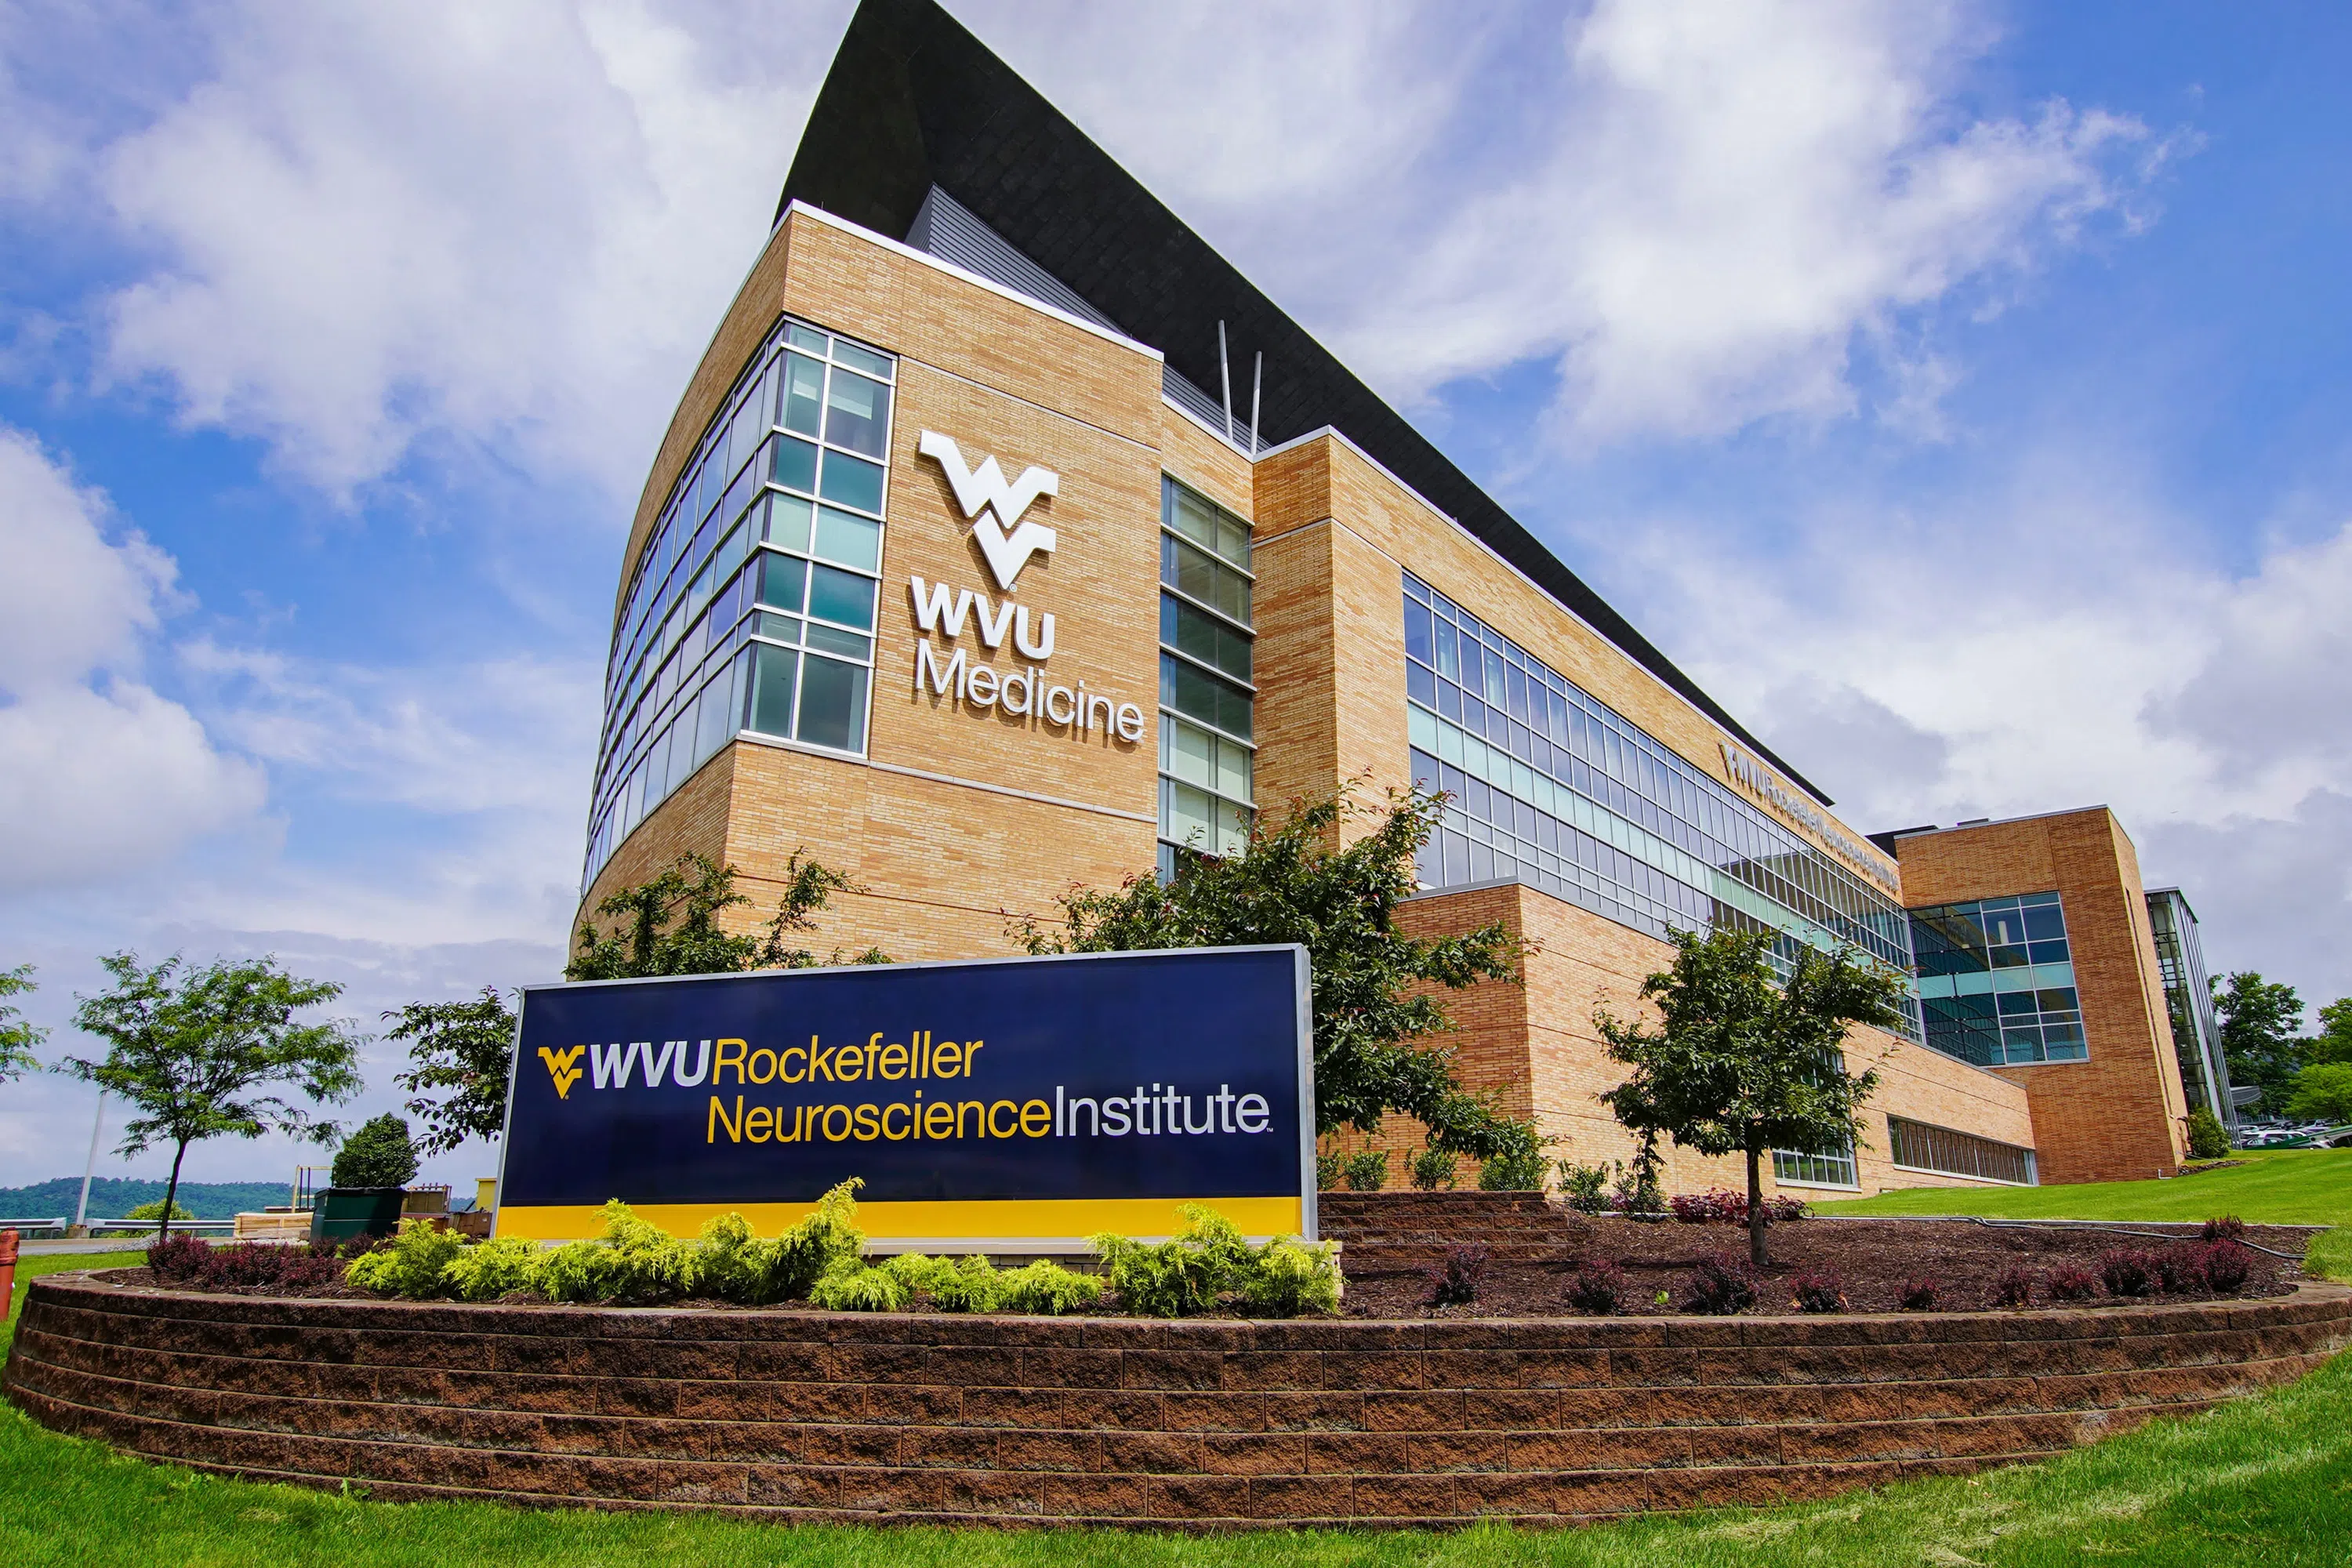 The exterior of WVU's Rockefeller Neuroscience Institute.